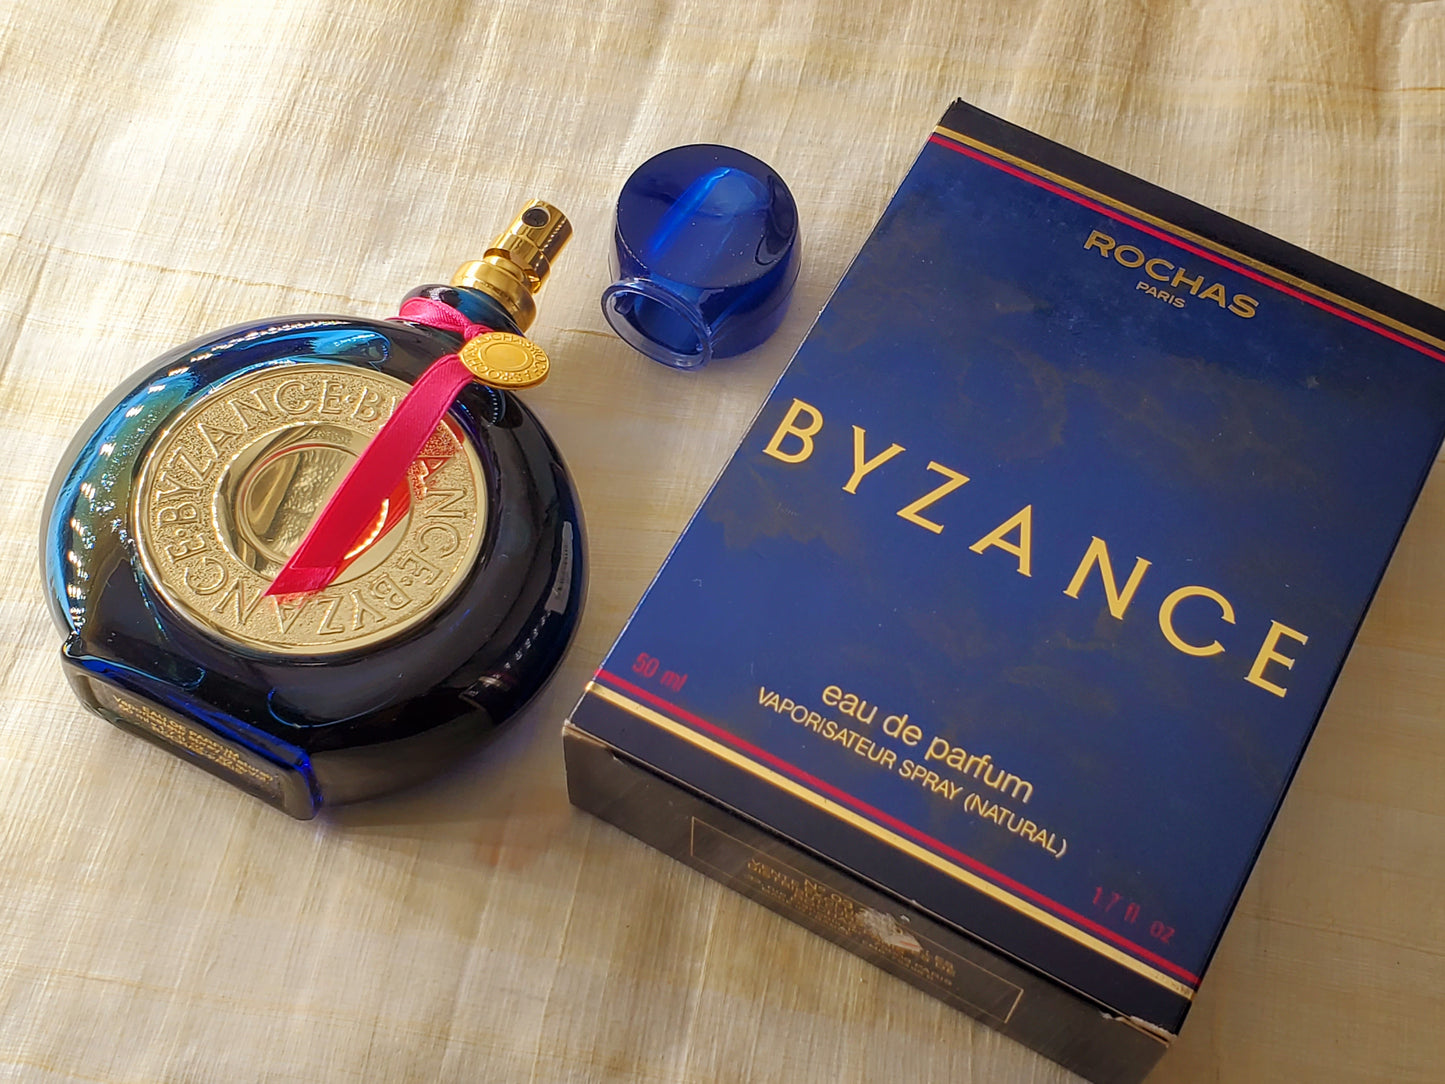 Rochas Byzance for Women EDP Spray 50 ml 1.7 oz, Vintage